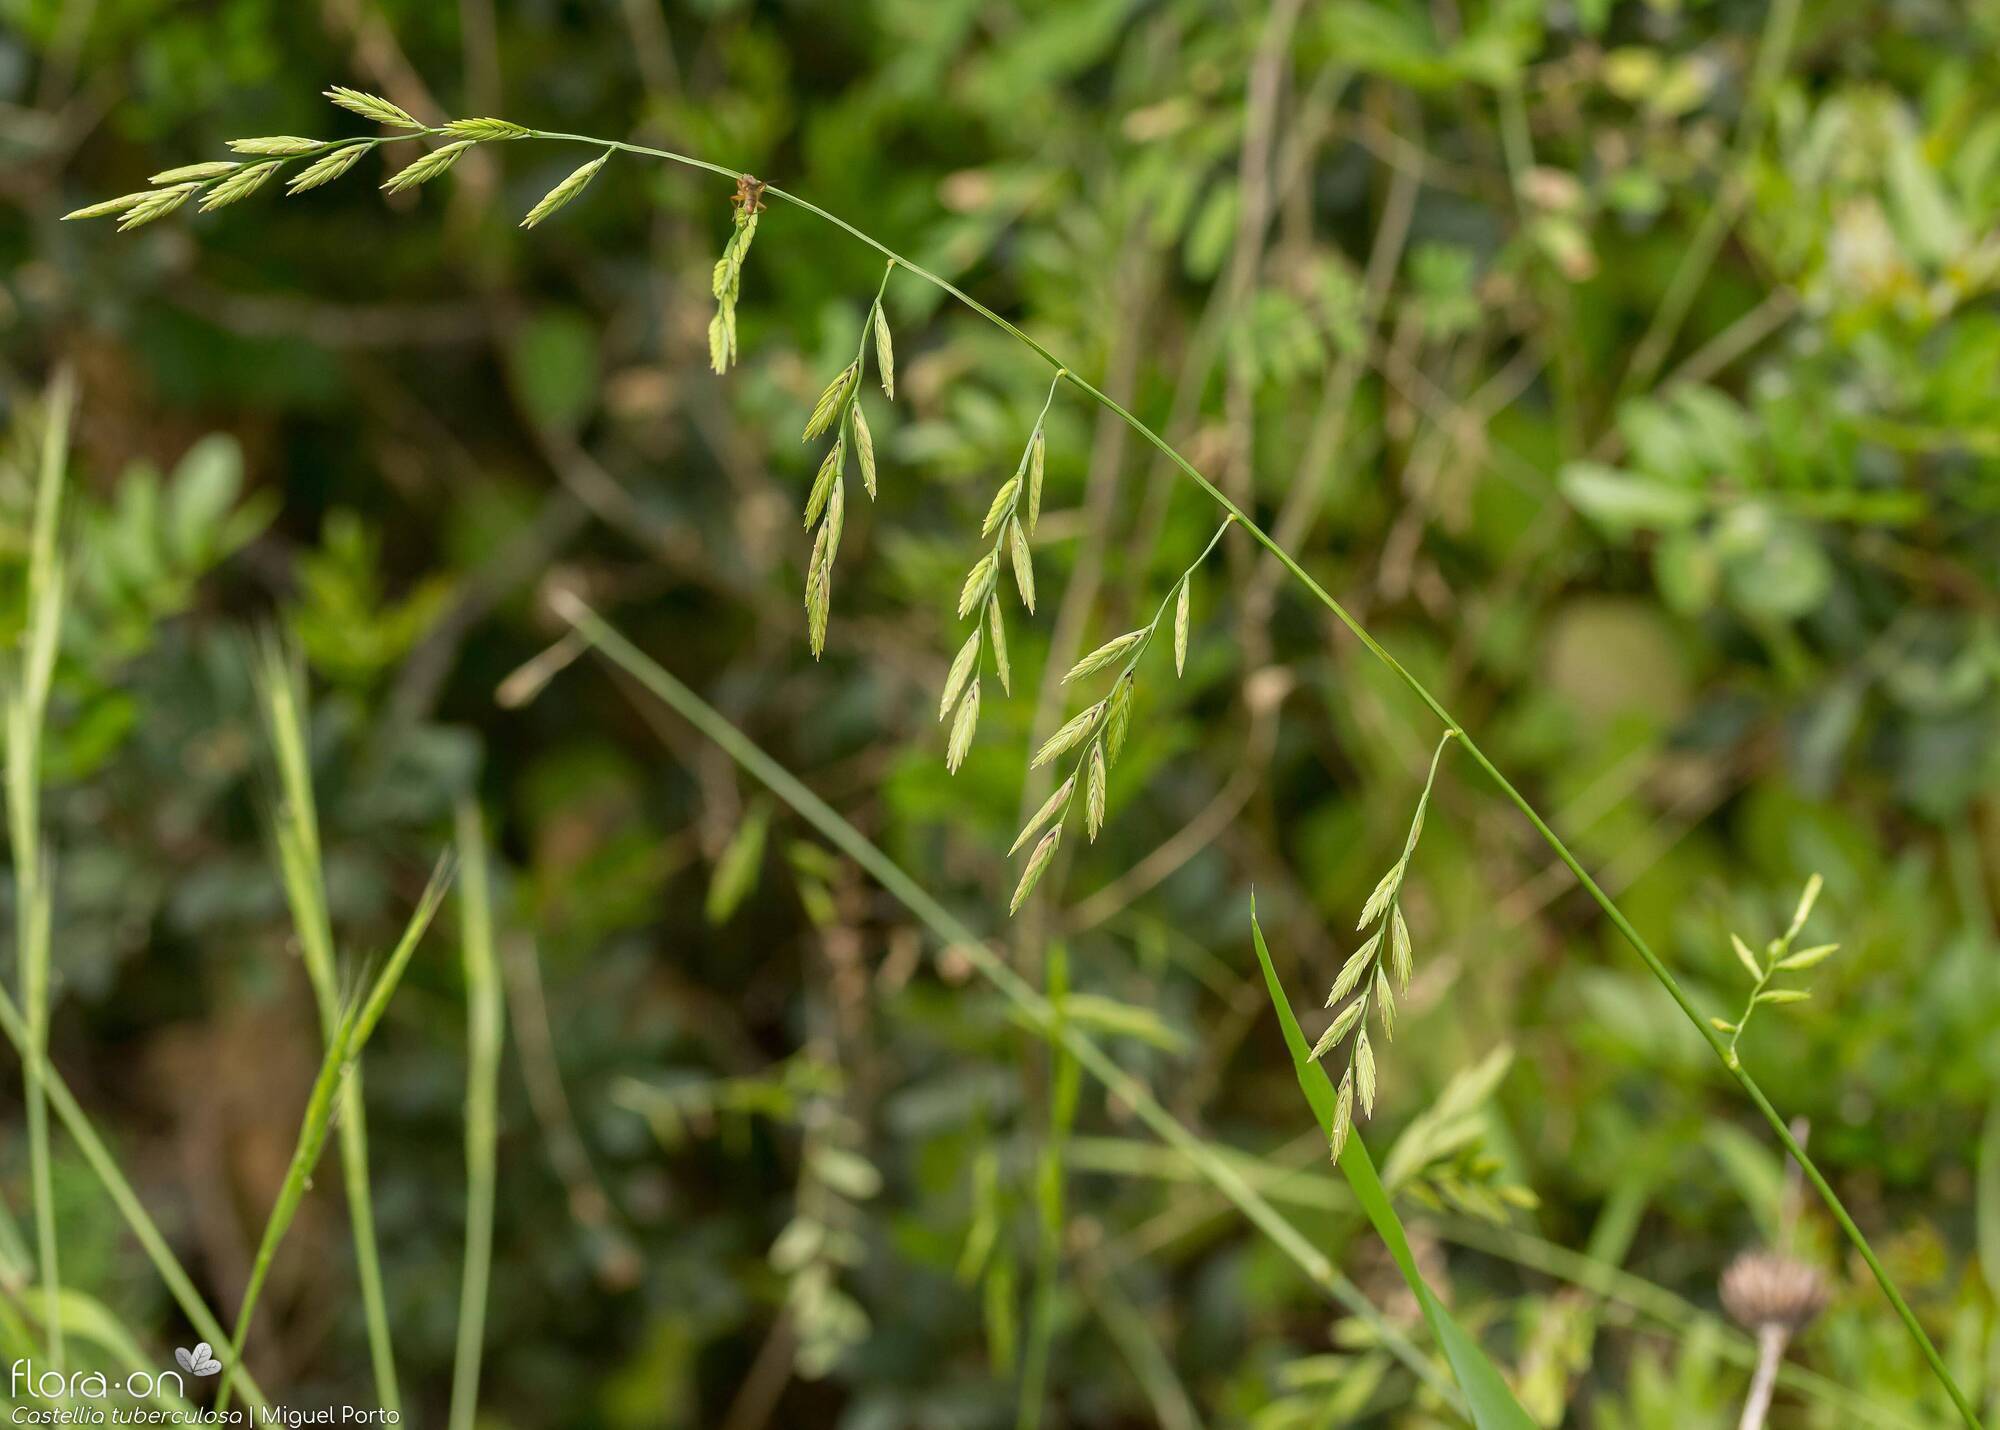 Castellia tuberculosa - Flor (geral) | Miguel Porto; CC BY-NC 4.0